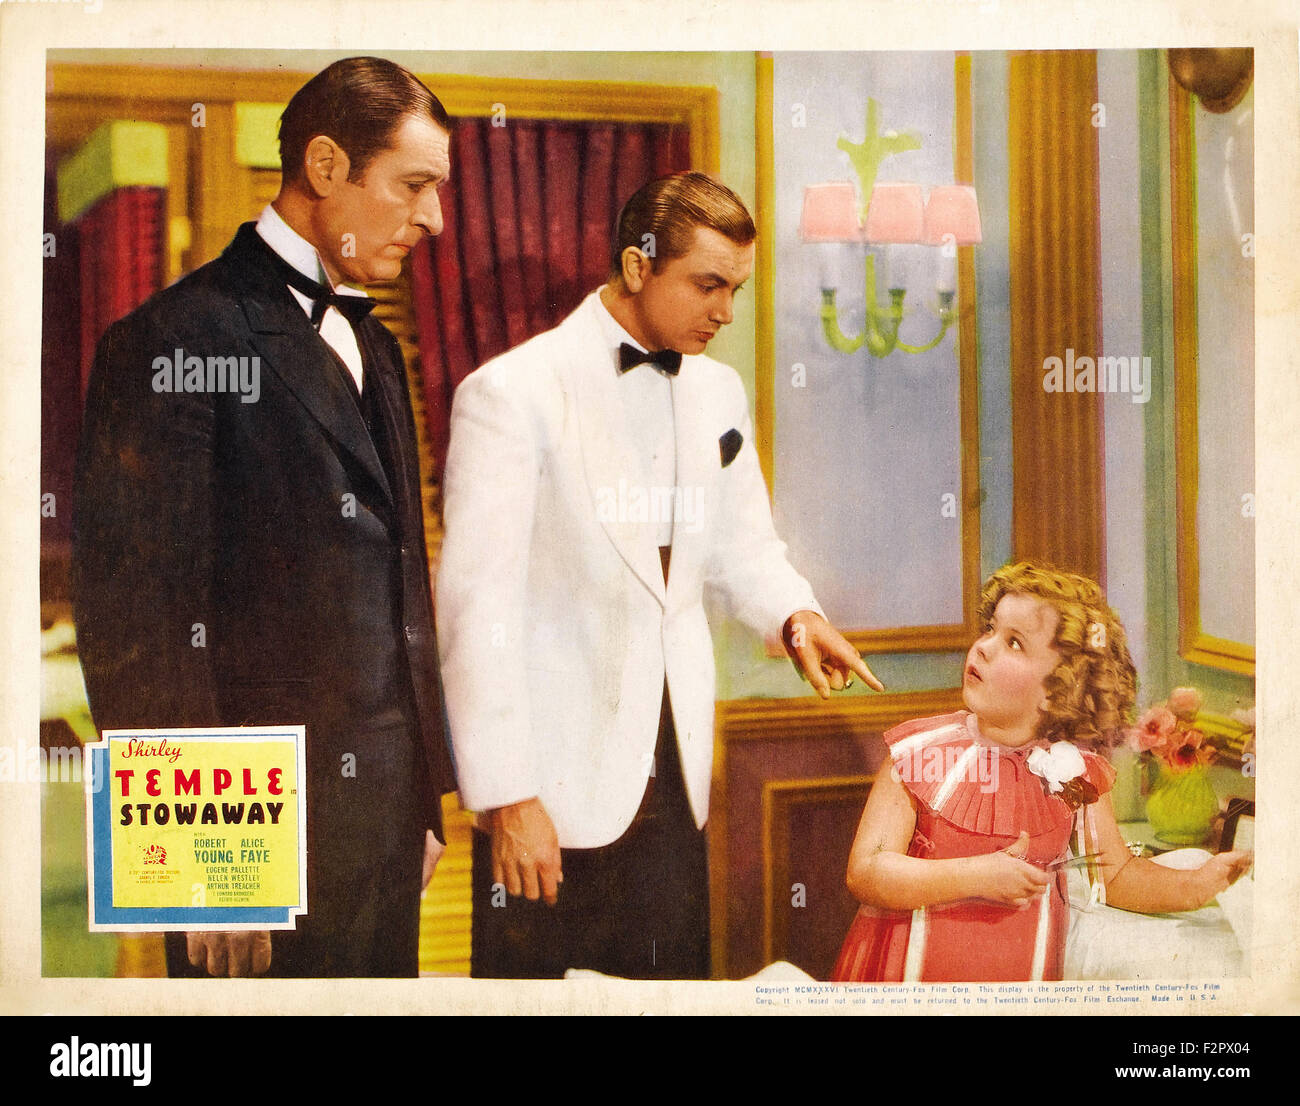 Stowaway (1936) - Movie Poster Stock Photo - Alamy